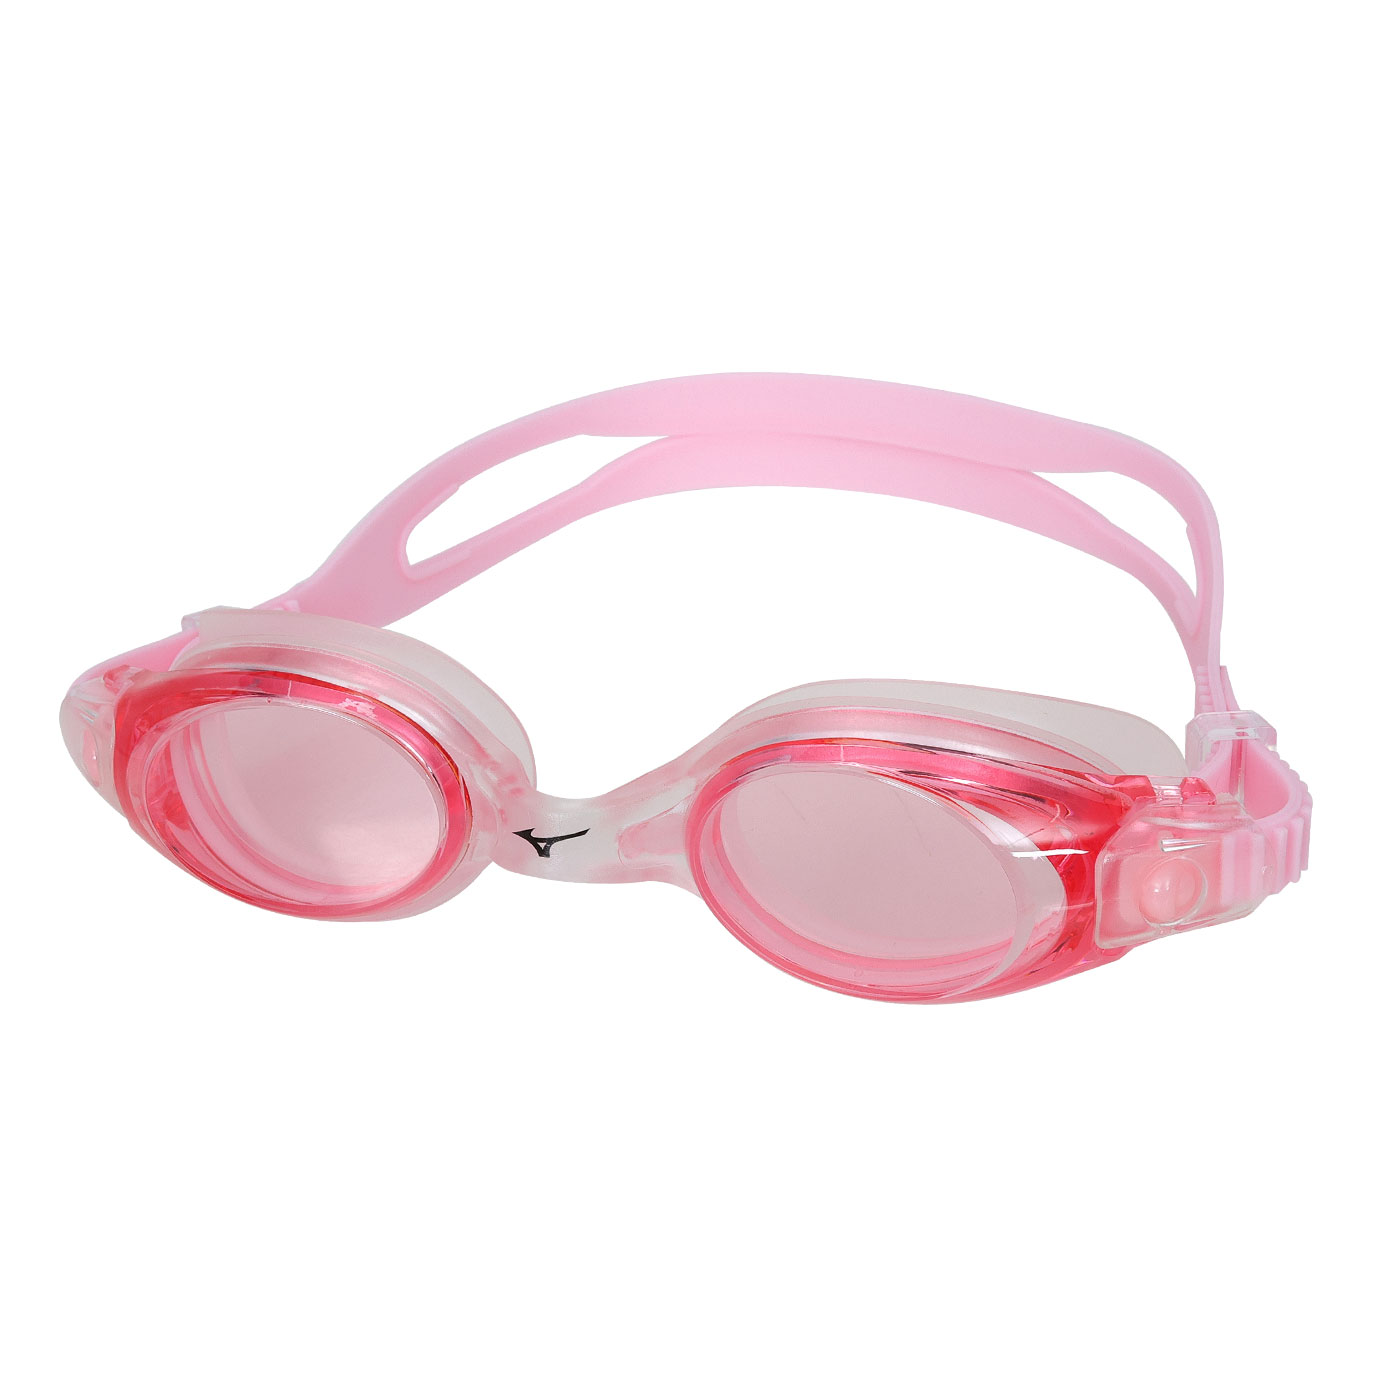 MIZUNO 泳鏡  SWIM N3TEB71000-64 - 粉桃紅